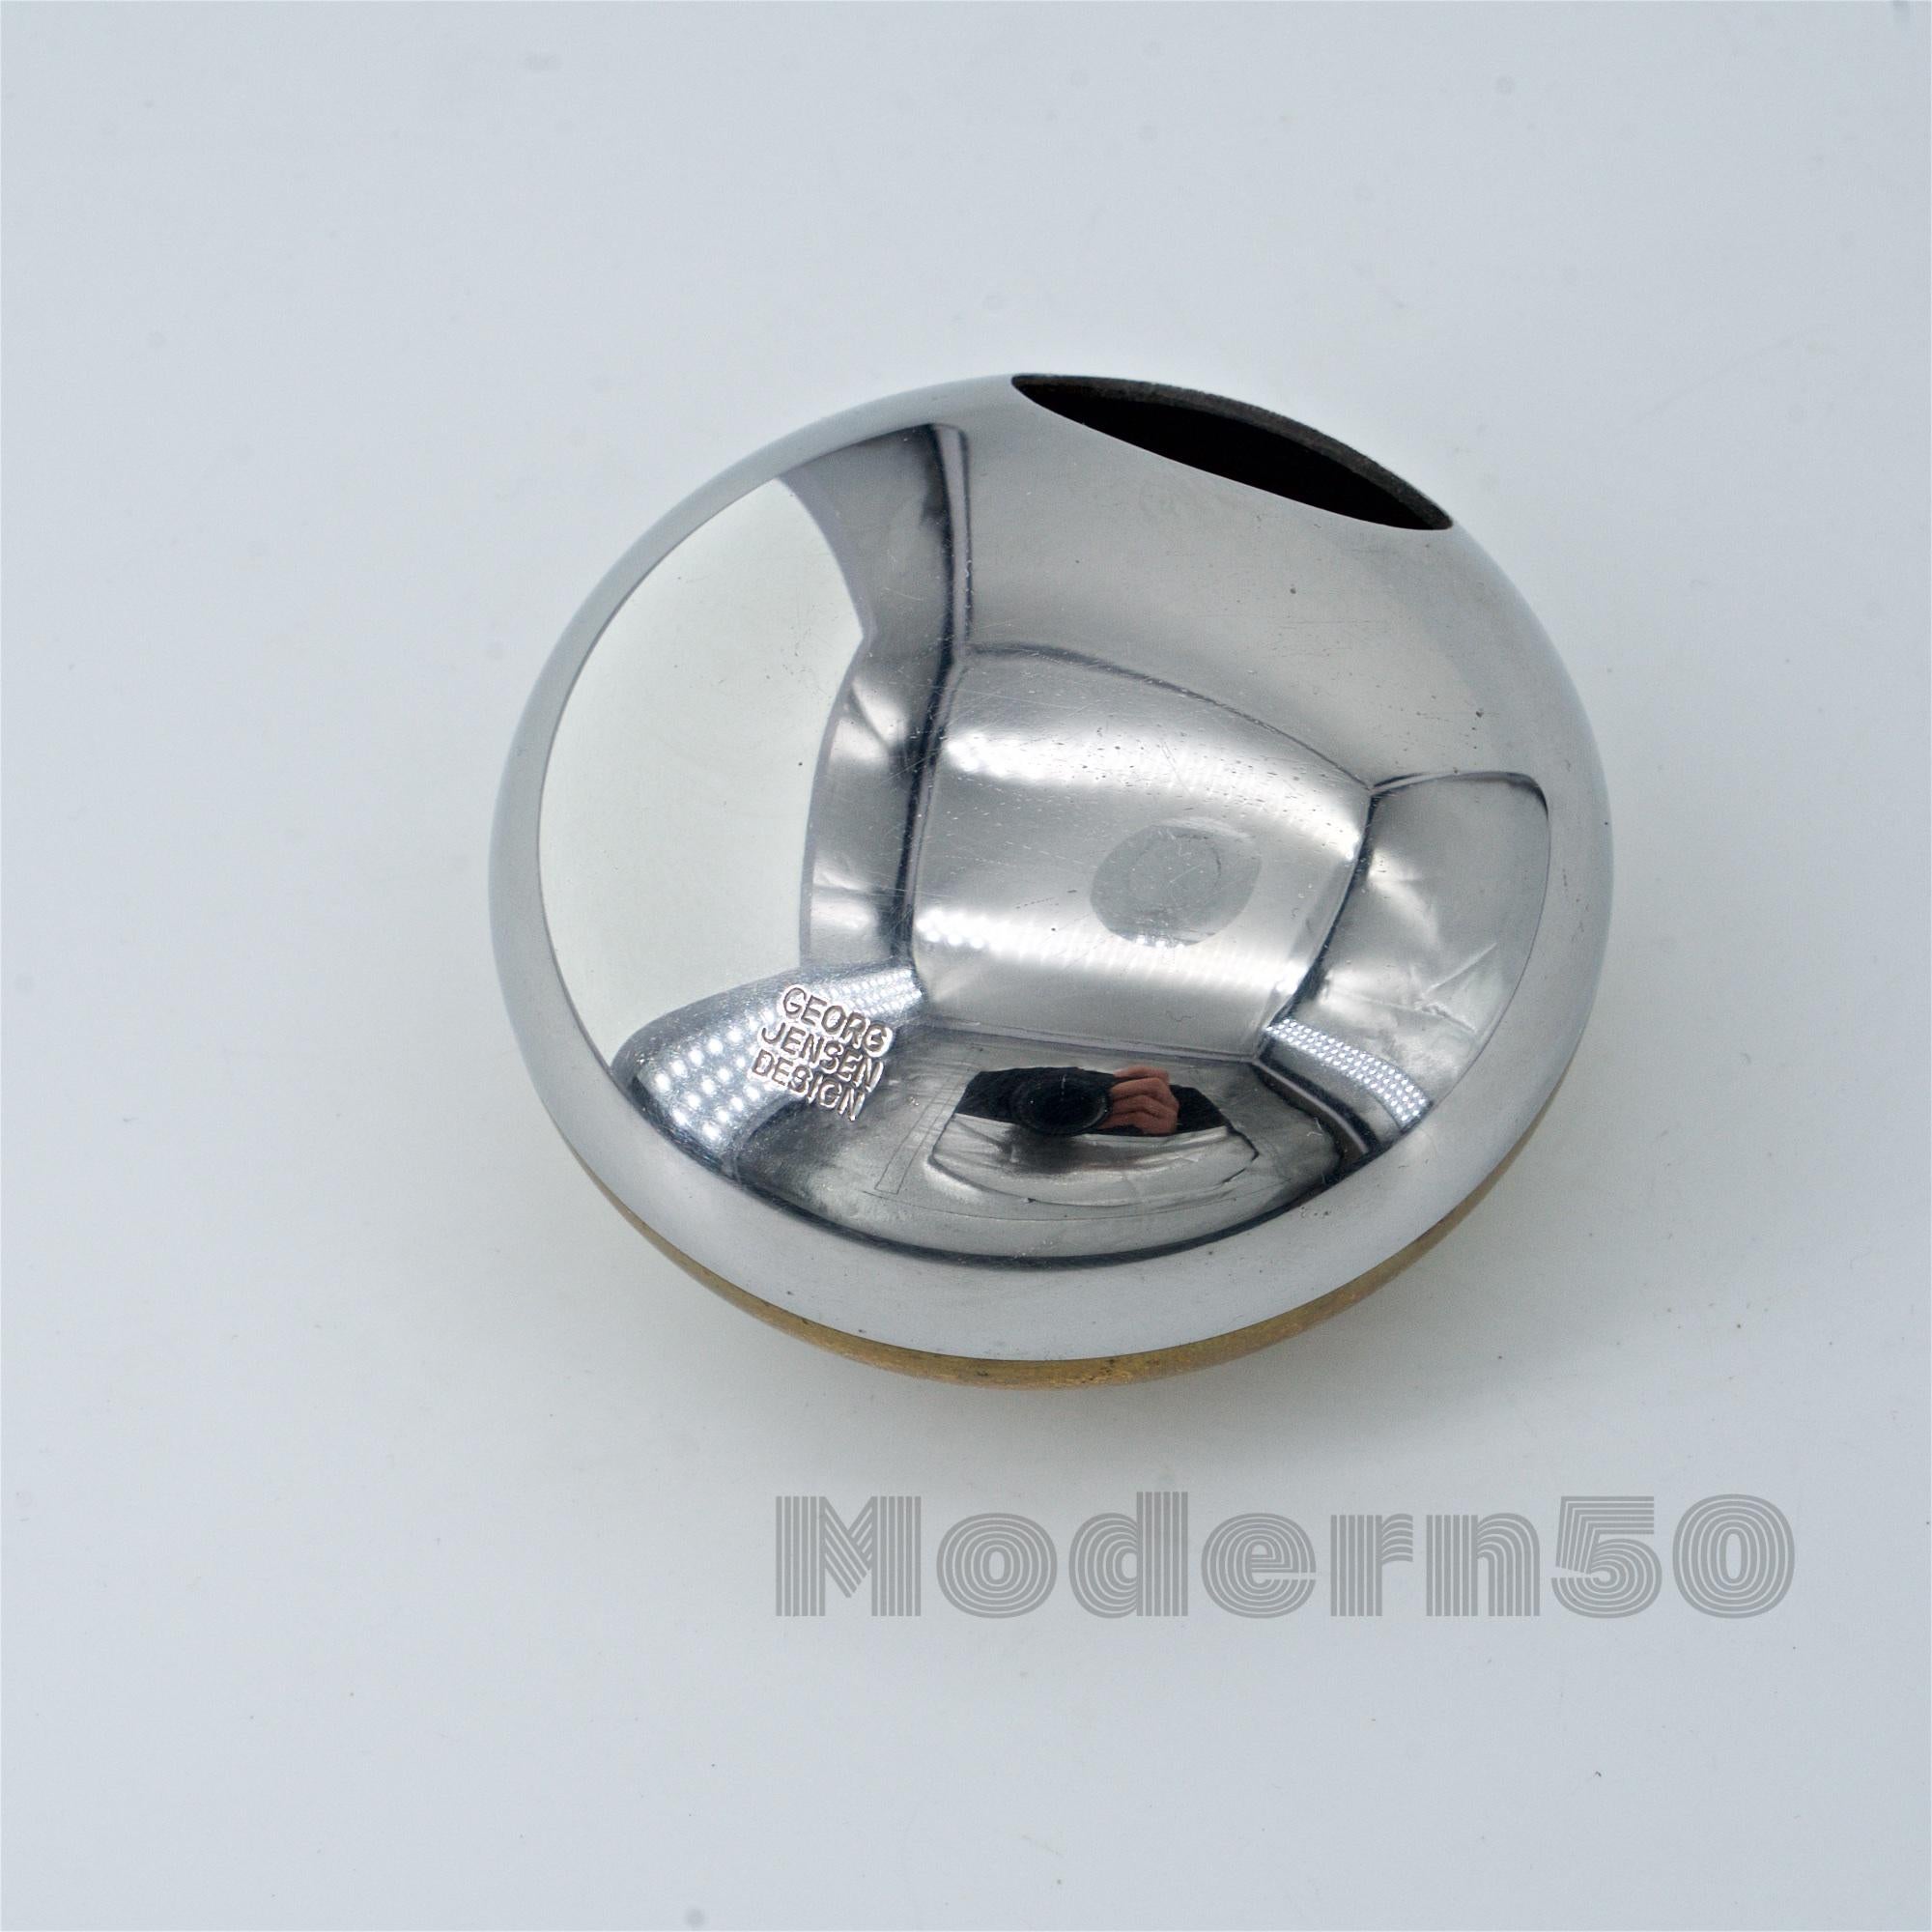 Polished two metal petite orb ashtray, marked Georg Jensen Design.